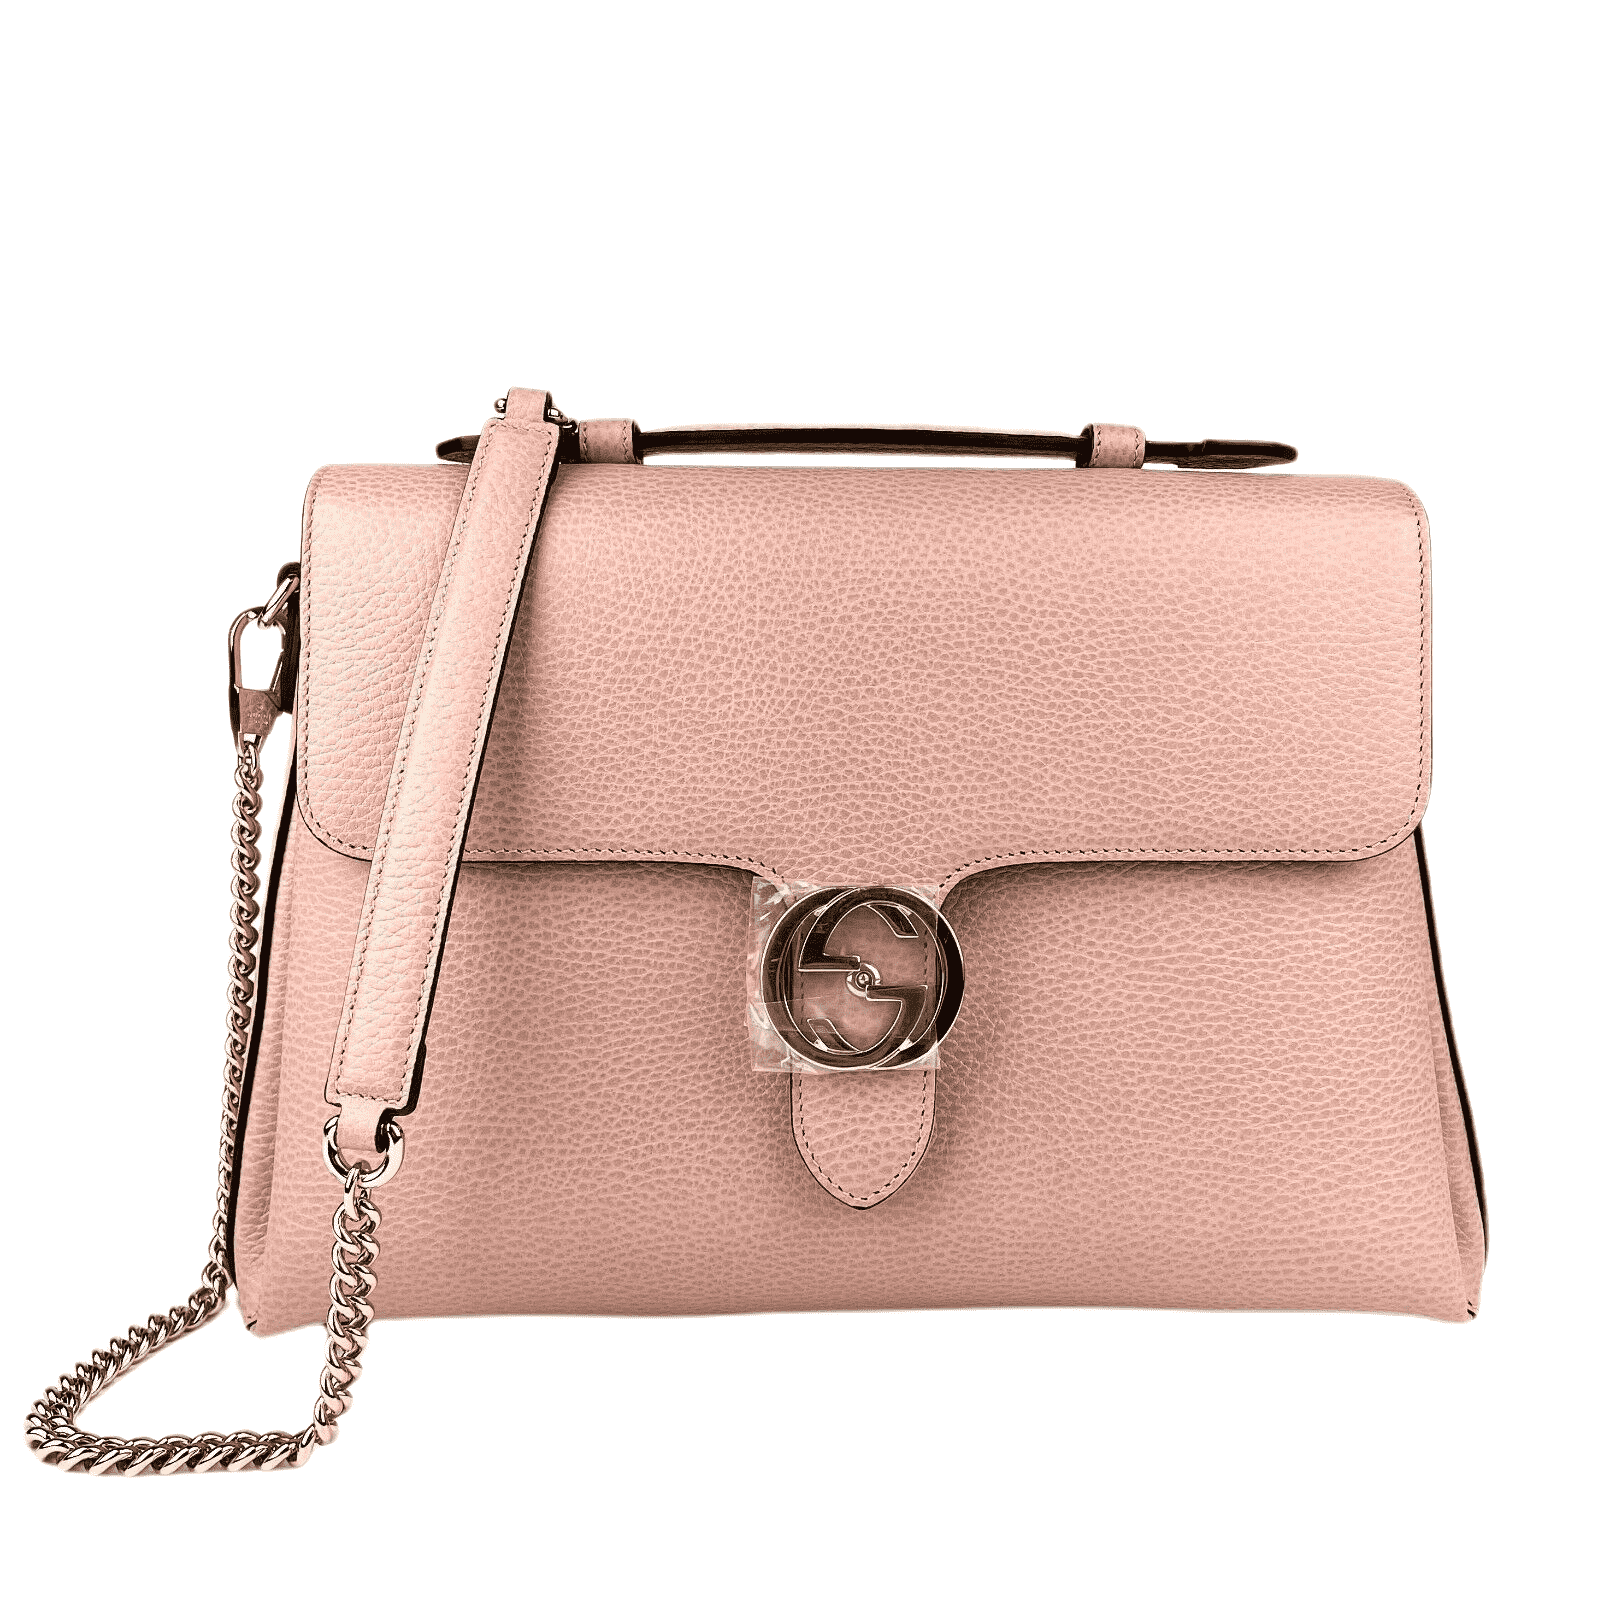 Gucci Powder Pink Leather Interlocking Chain Bag